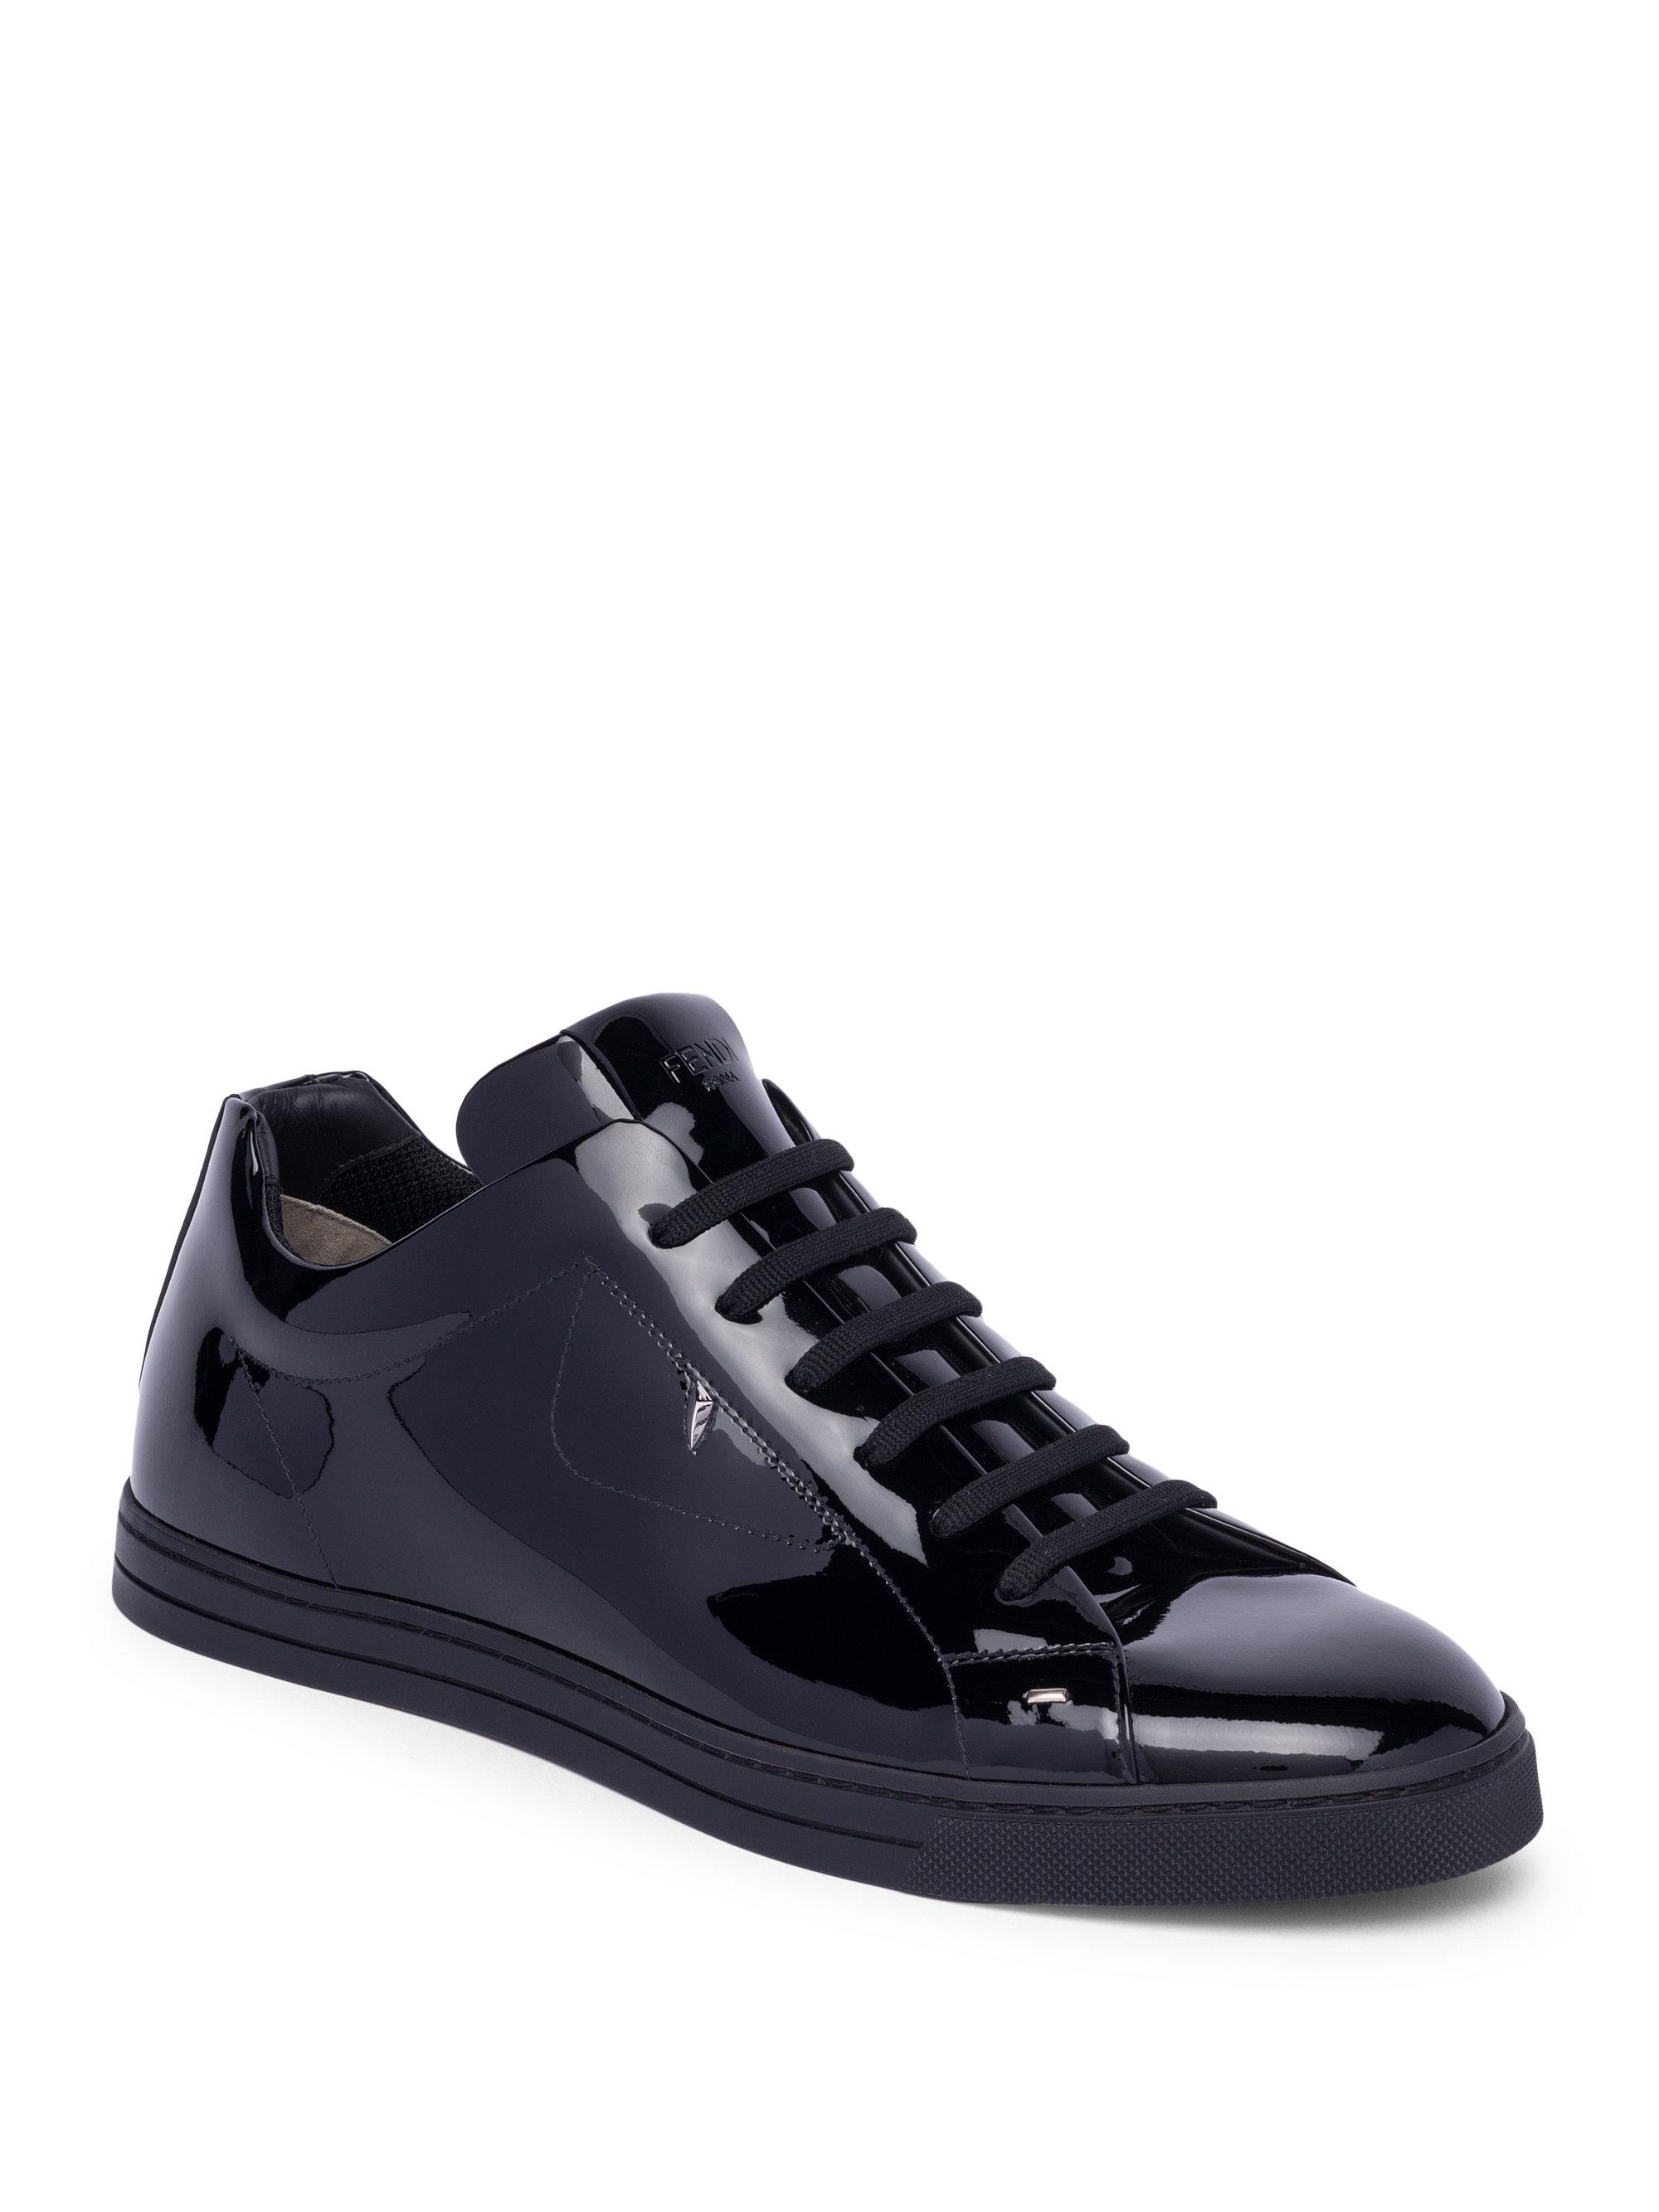 Lyst - Fendi Monster Patent Leather Sneakers in Black for Men